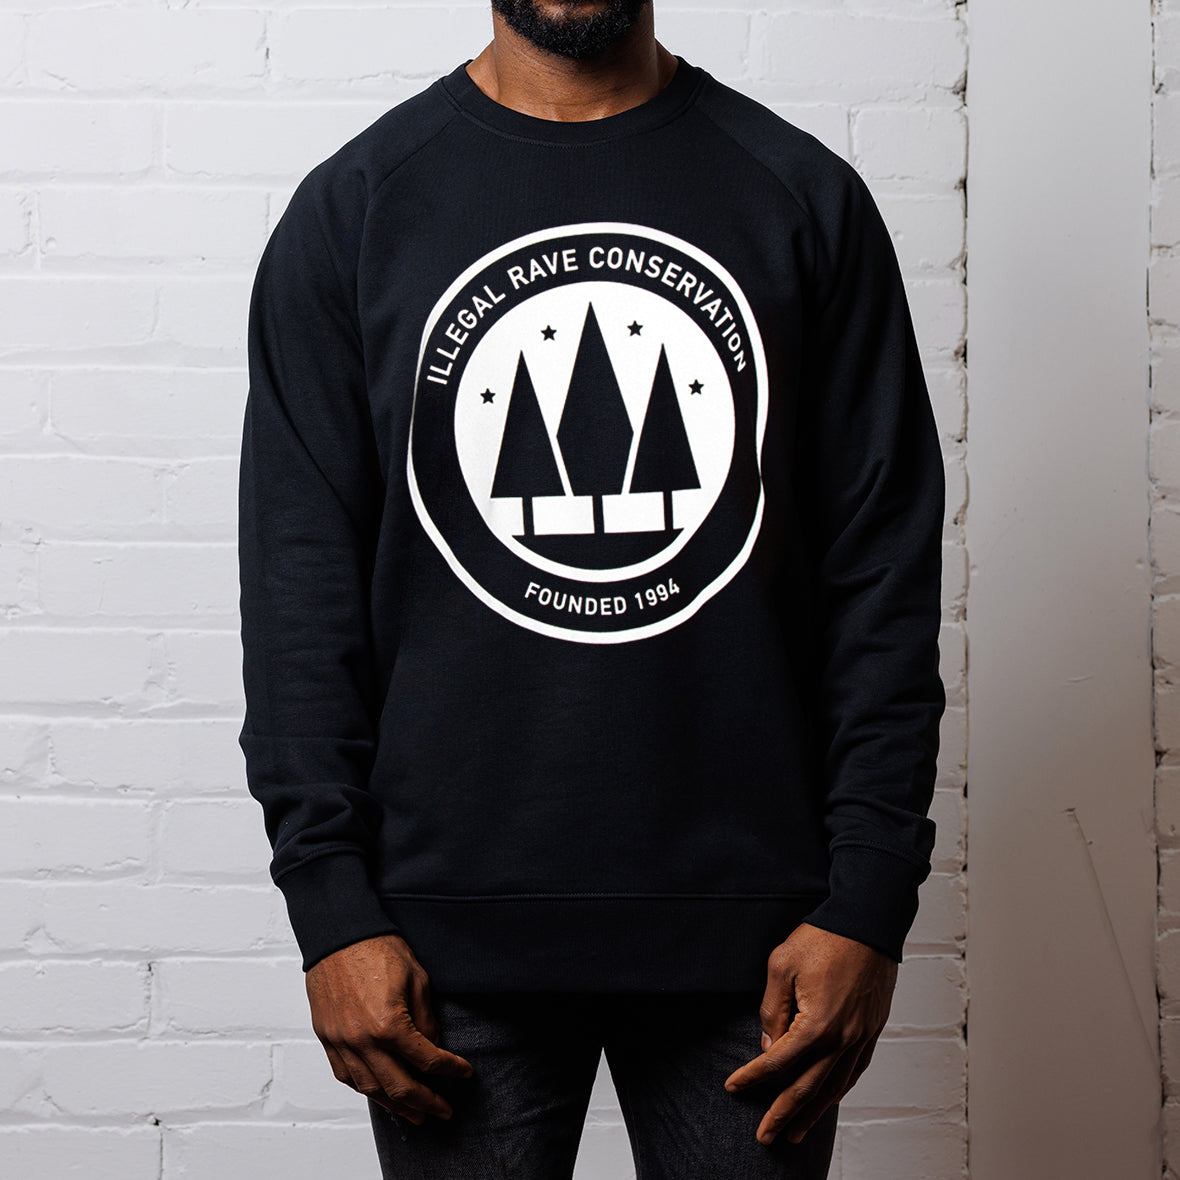 Illegal Rave Conservation - Sweatshirt - Black